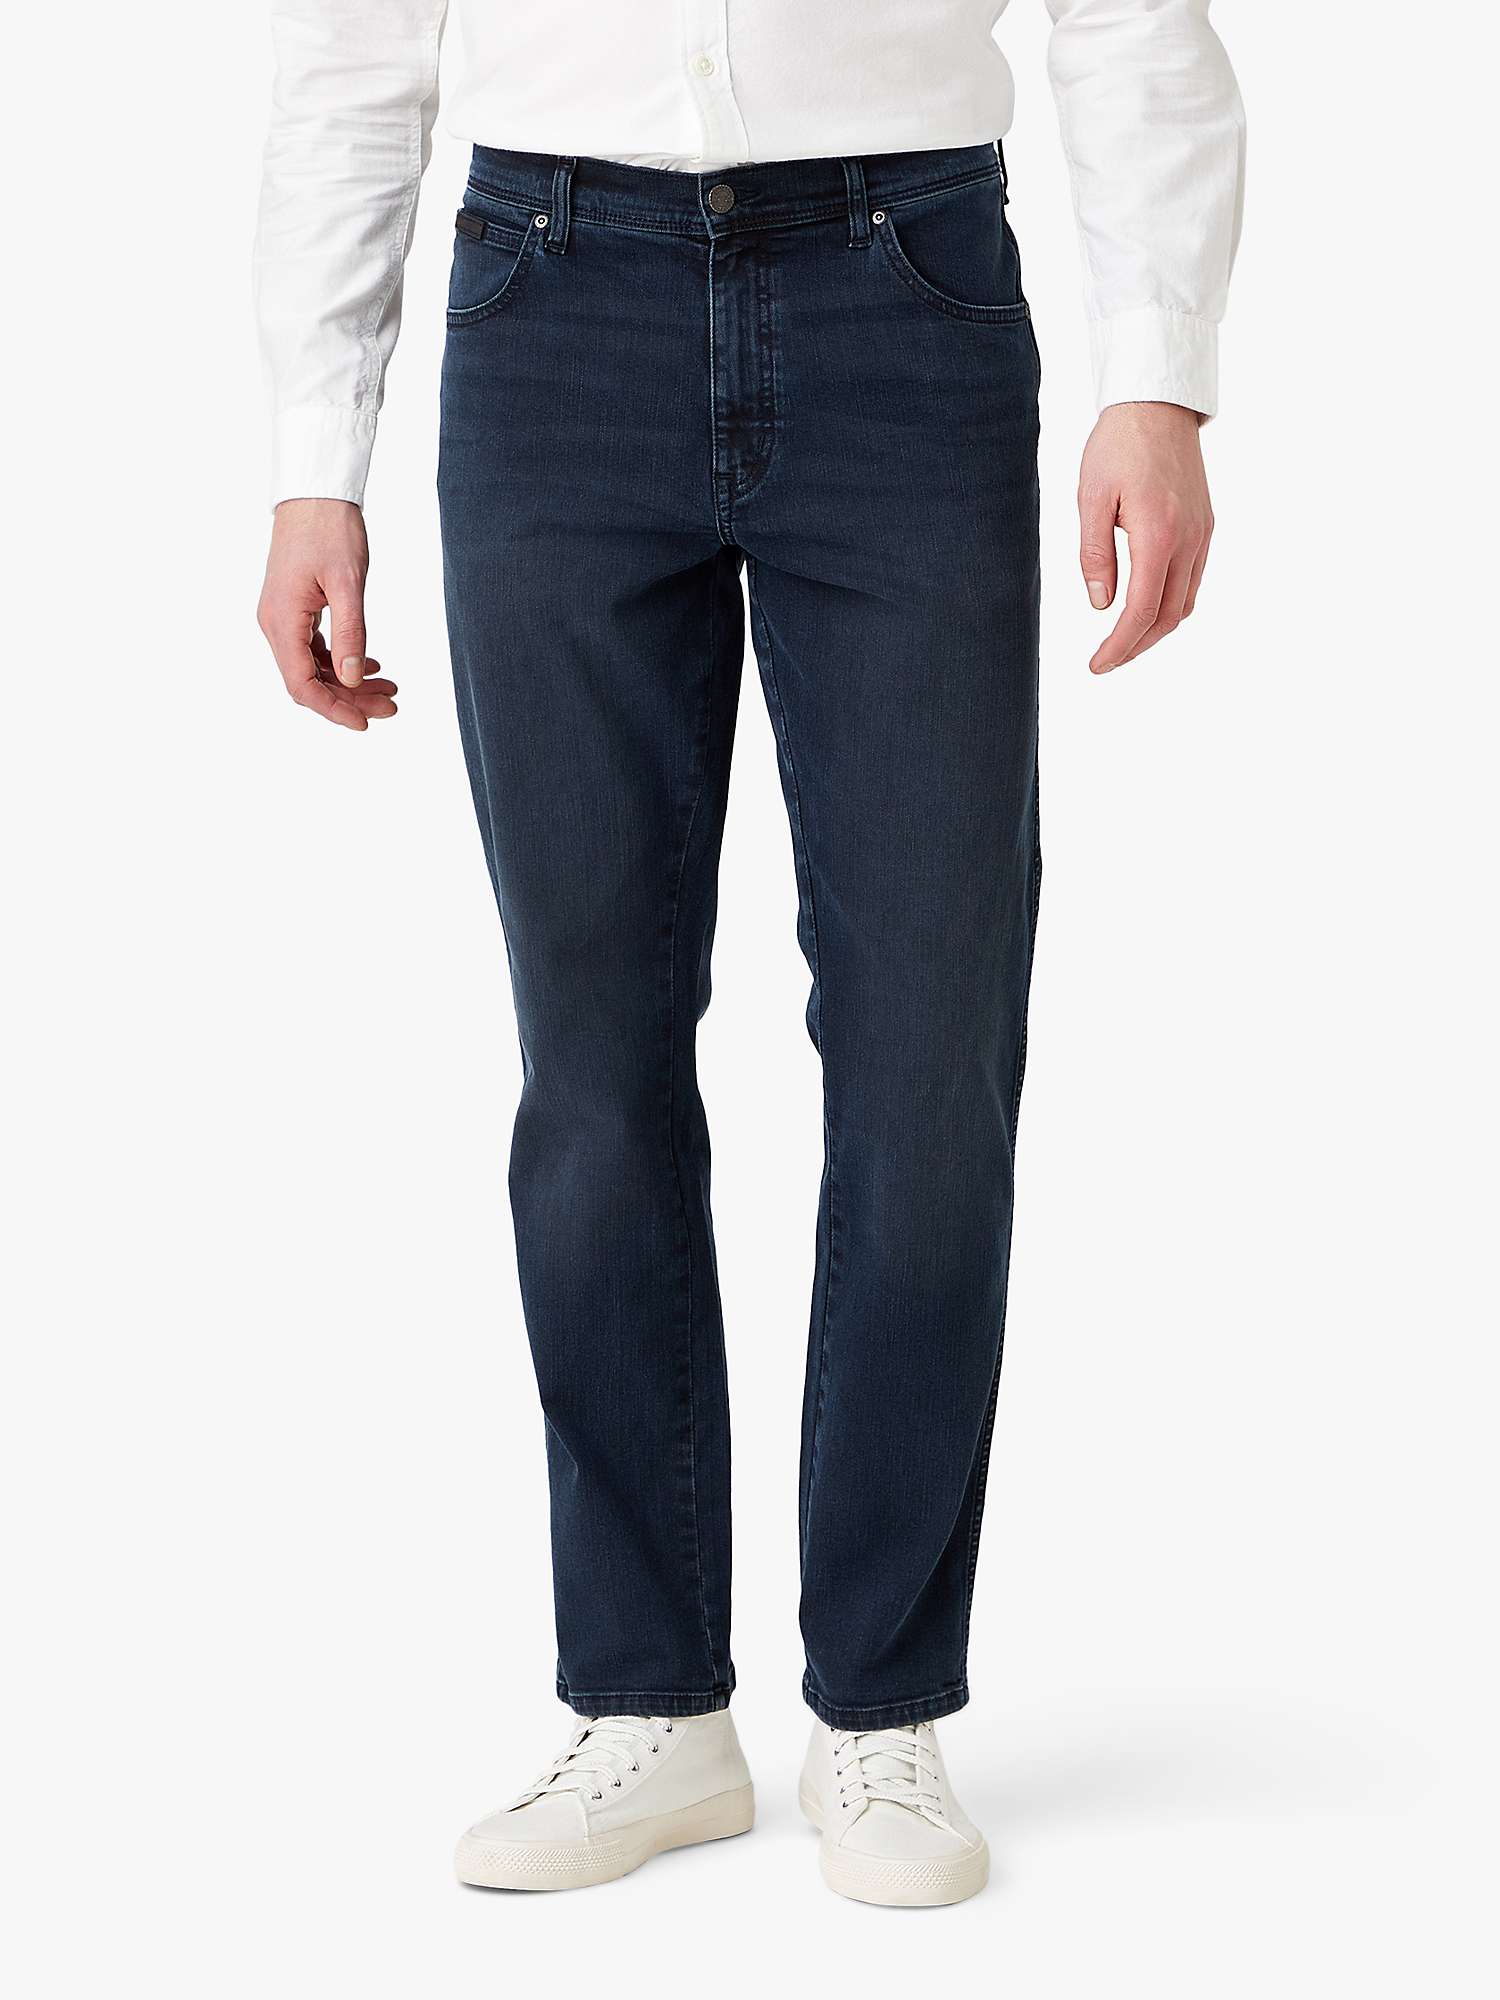 Buy Wrangler Texas Slim Fit Jeans, Blue Online at johnlewis.com